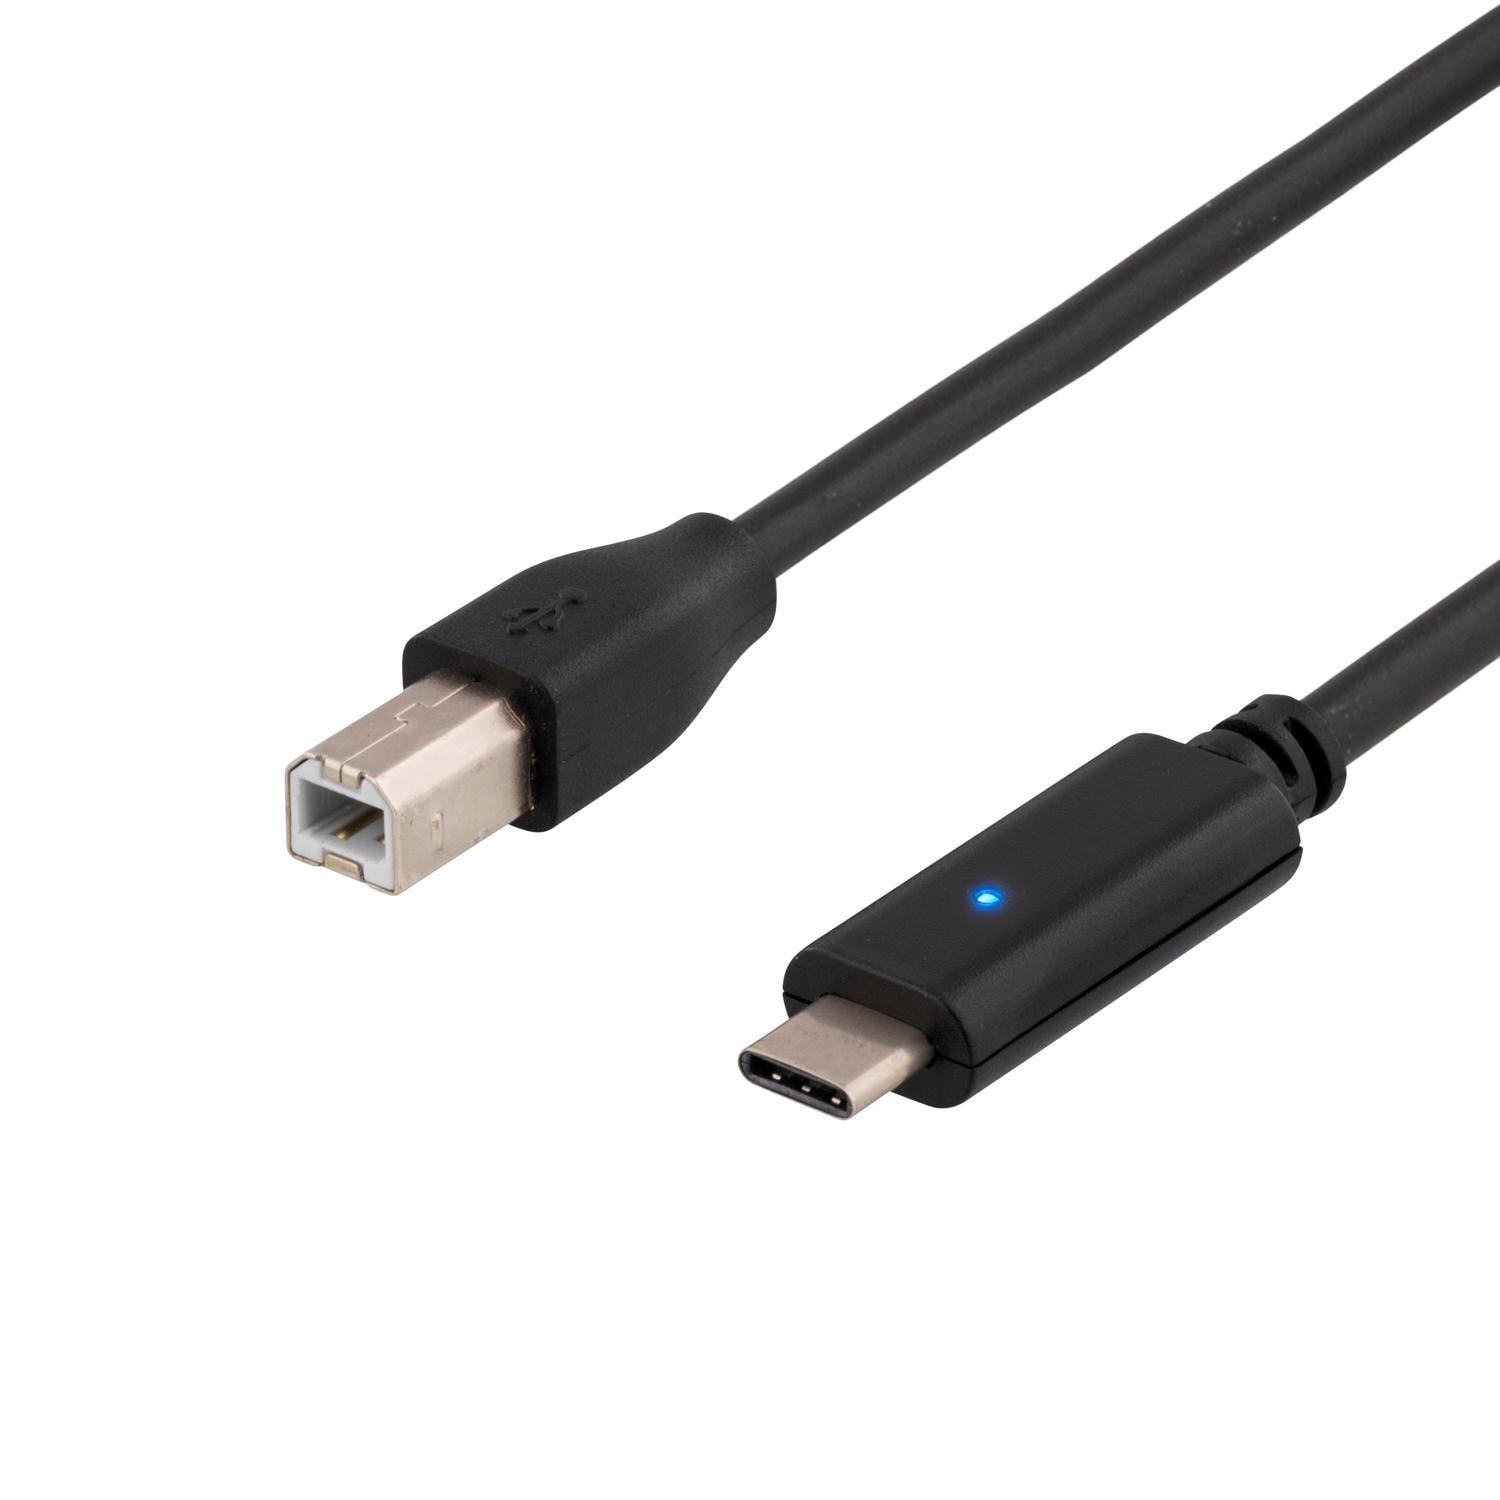 DELTACO USB 2.0 kabel, Type C Ha - Type B Ha, 1m, svart - Elkjøp